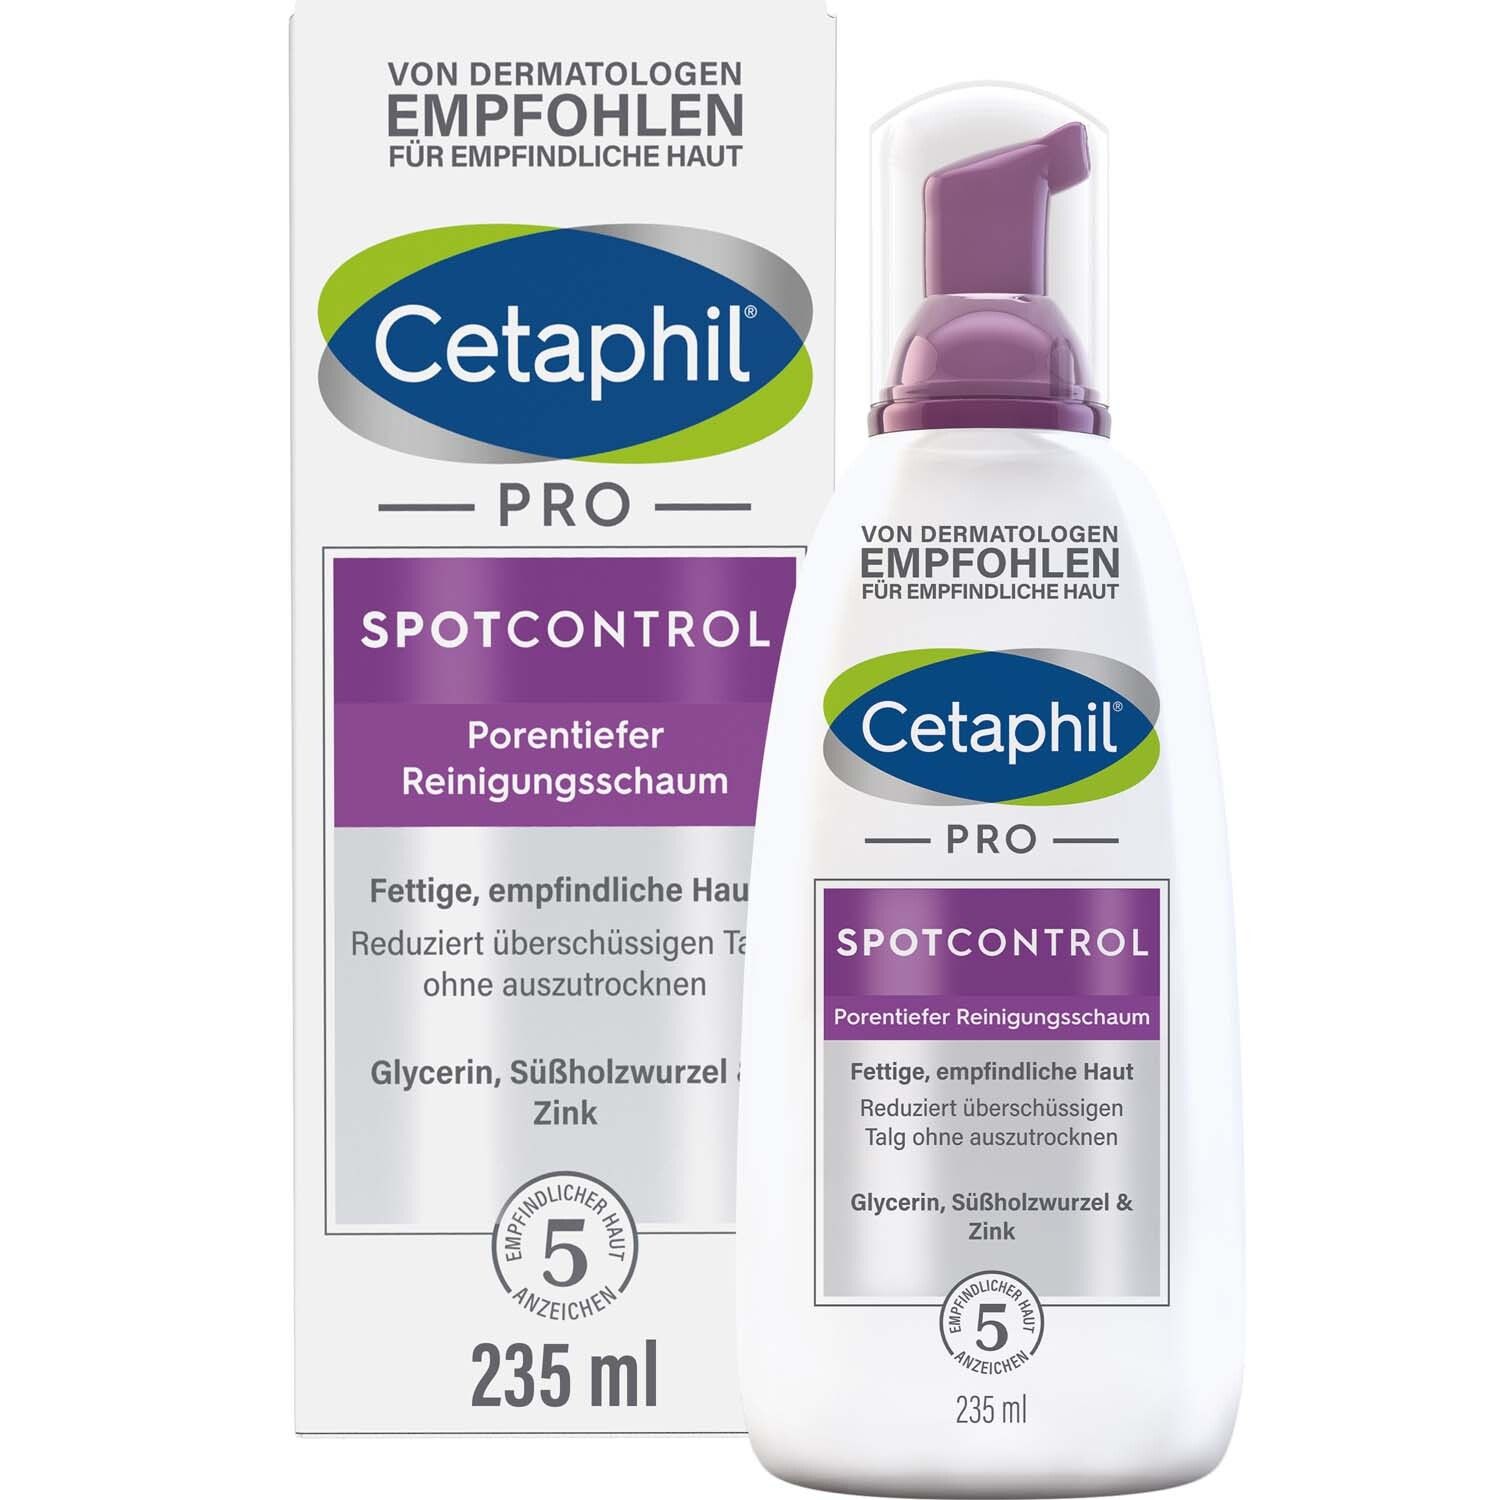 Image of Cetaphil® PRO SpotControl Porentiefer Reinigungsschaum